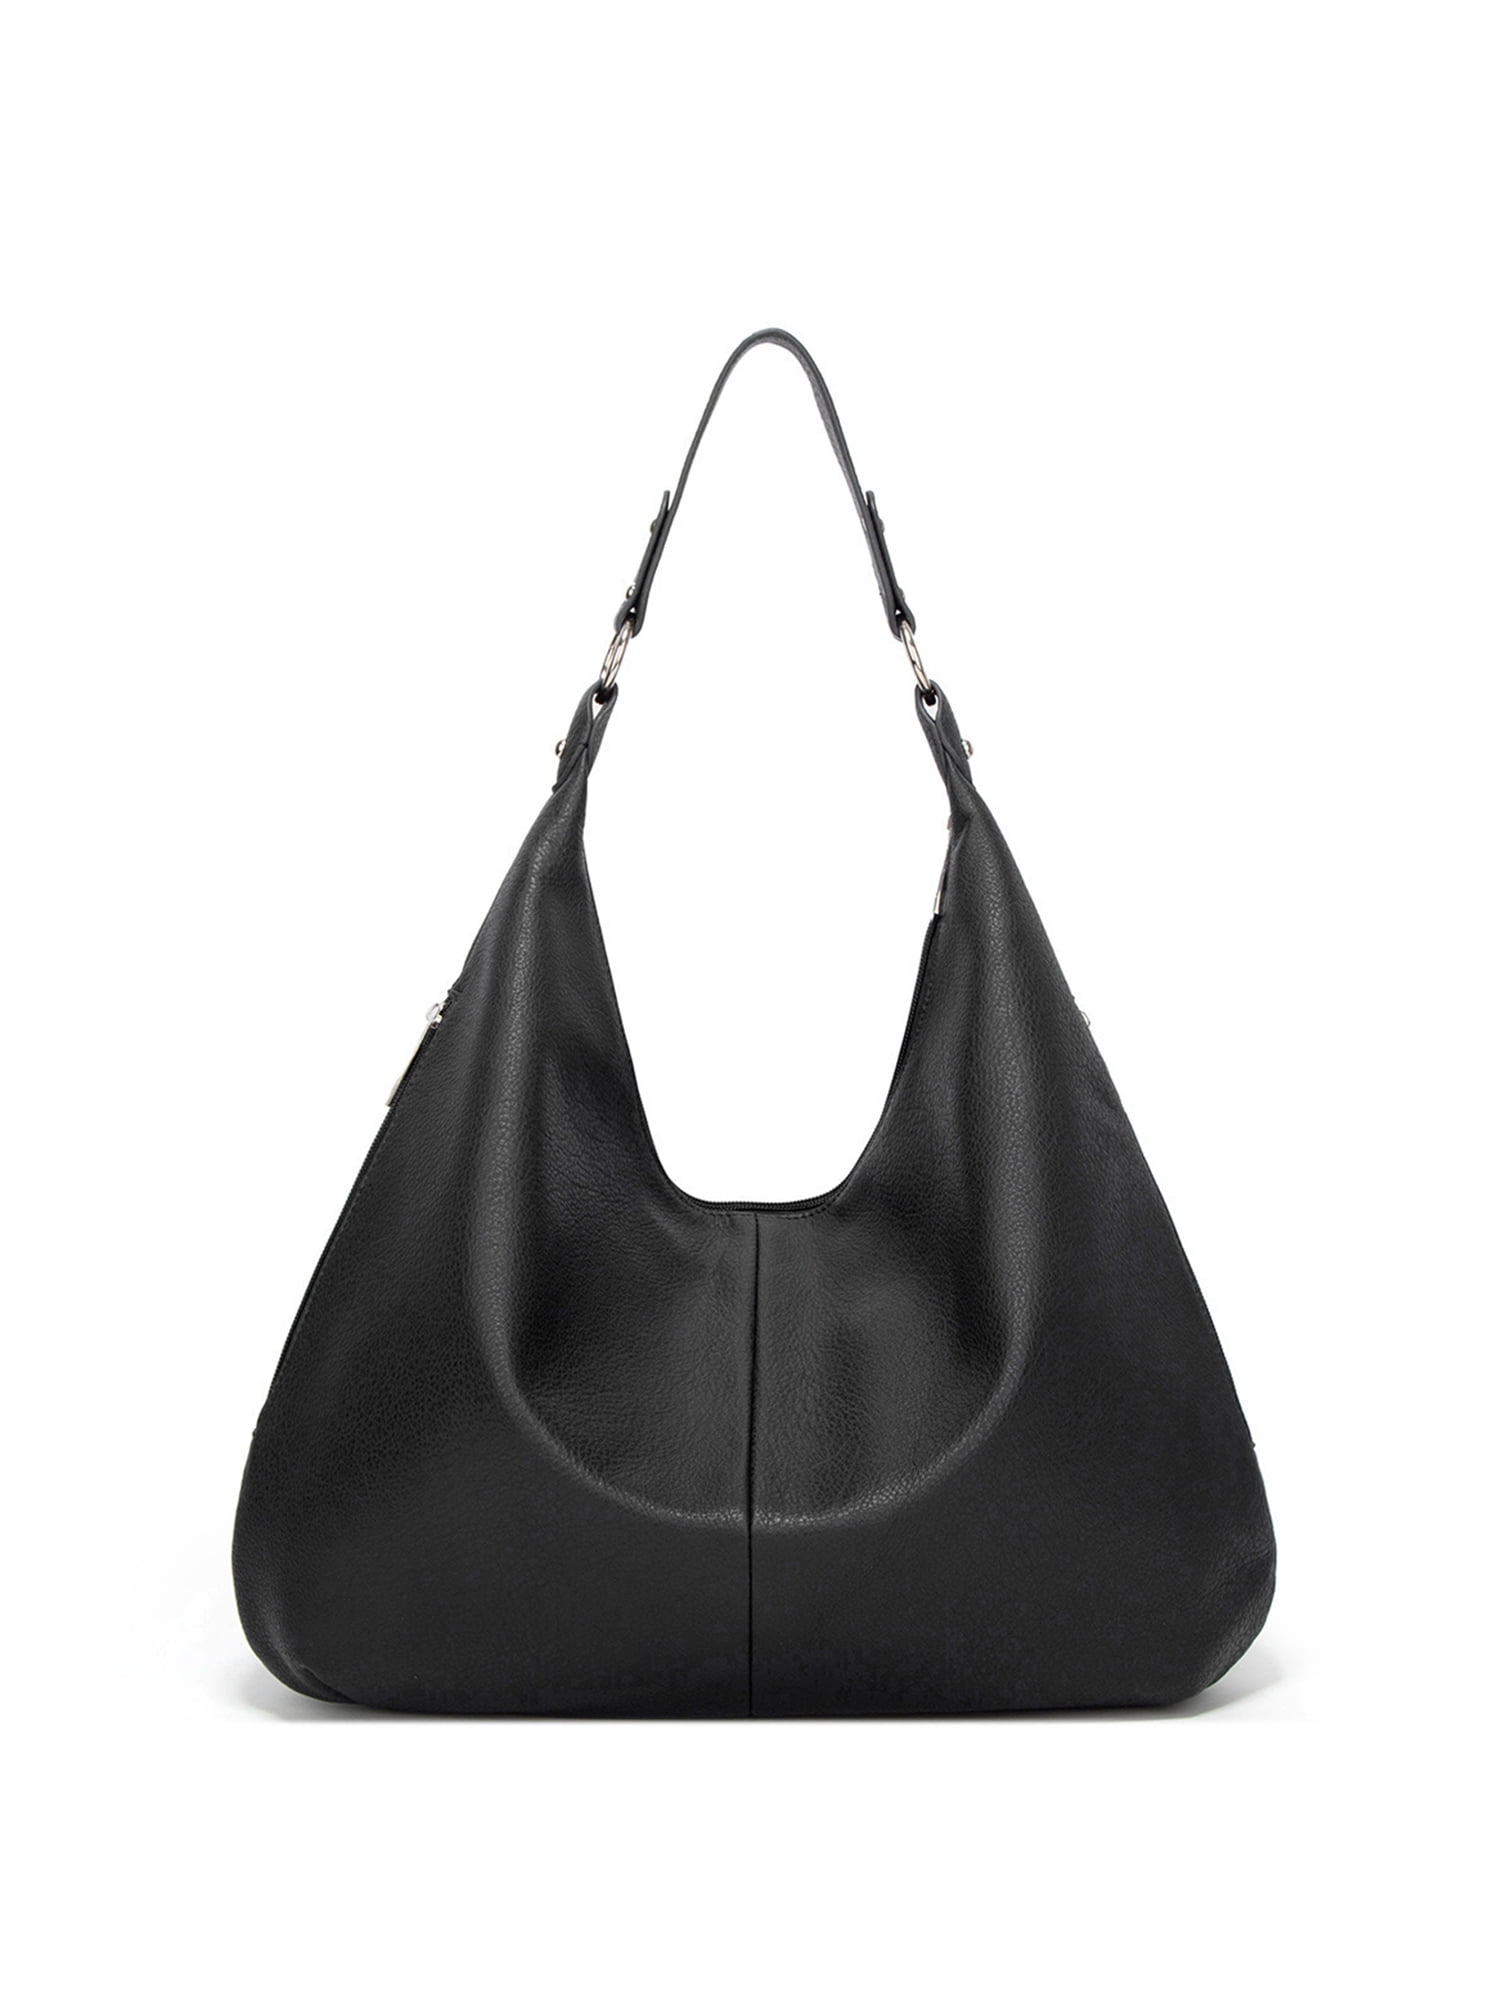 Avamo Lady Handbag Top Handle Crossbody Bags Purse Satchel Vintage Shoulder  Bag Large Capacity Dating Tote Brown Home Bag None 